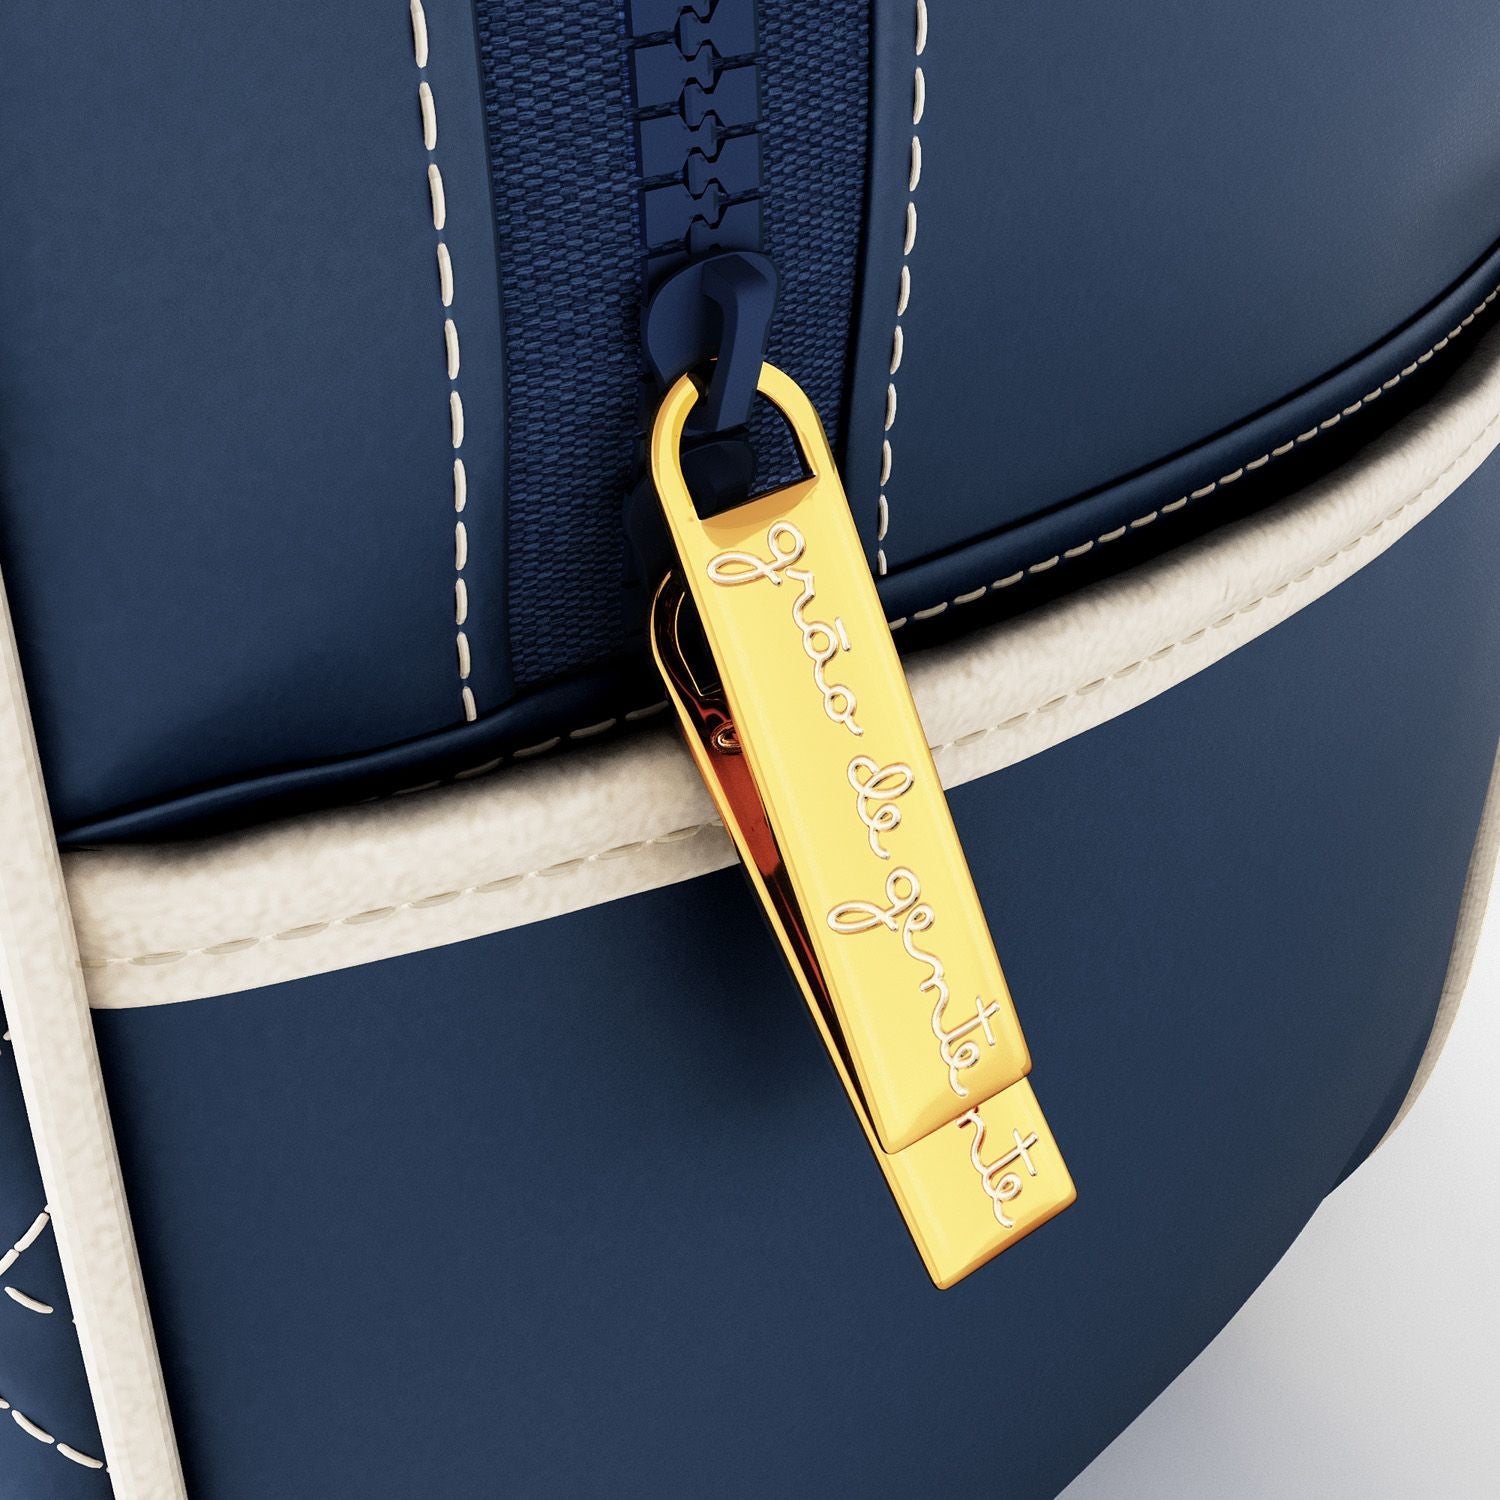 3 Piece Navy Blue and Beige Luxury Diaper Bag Set